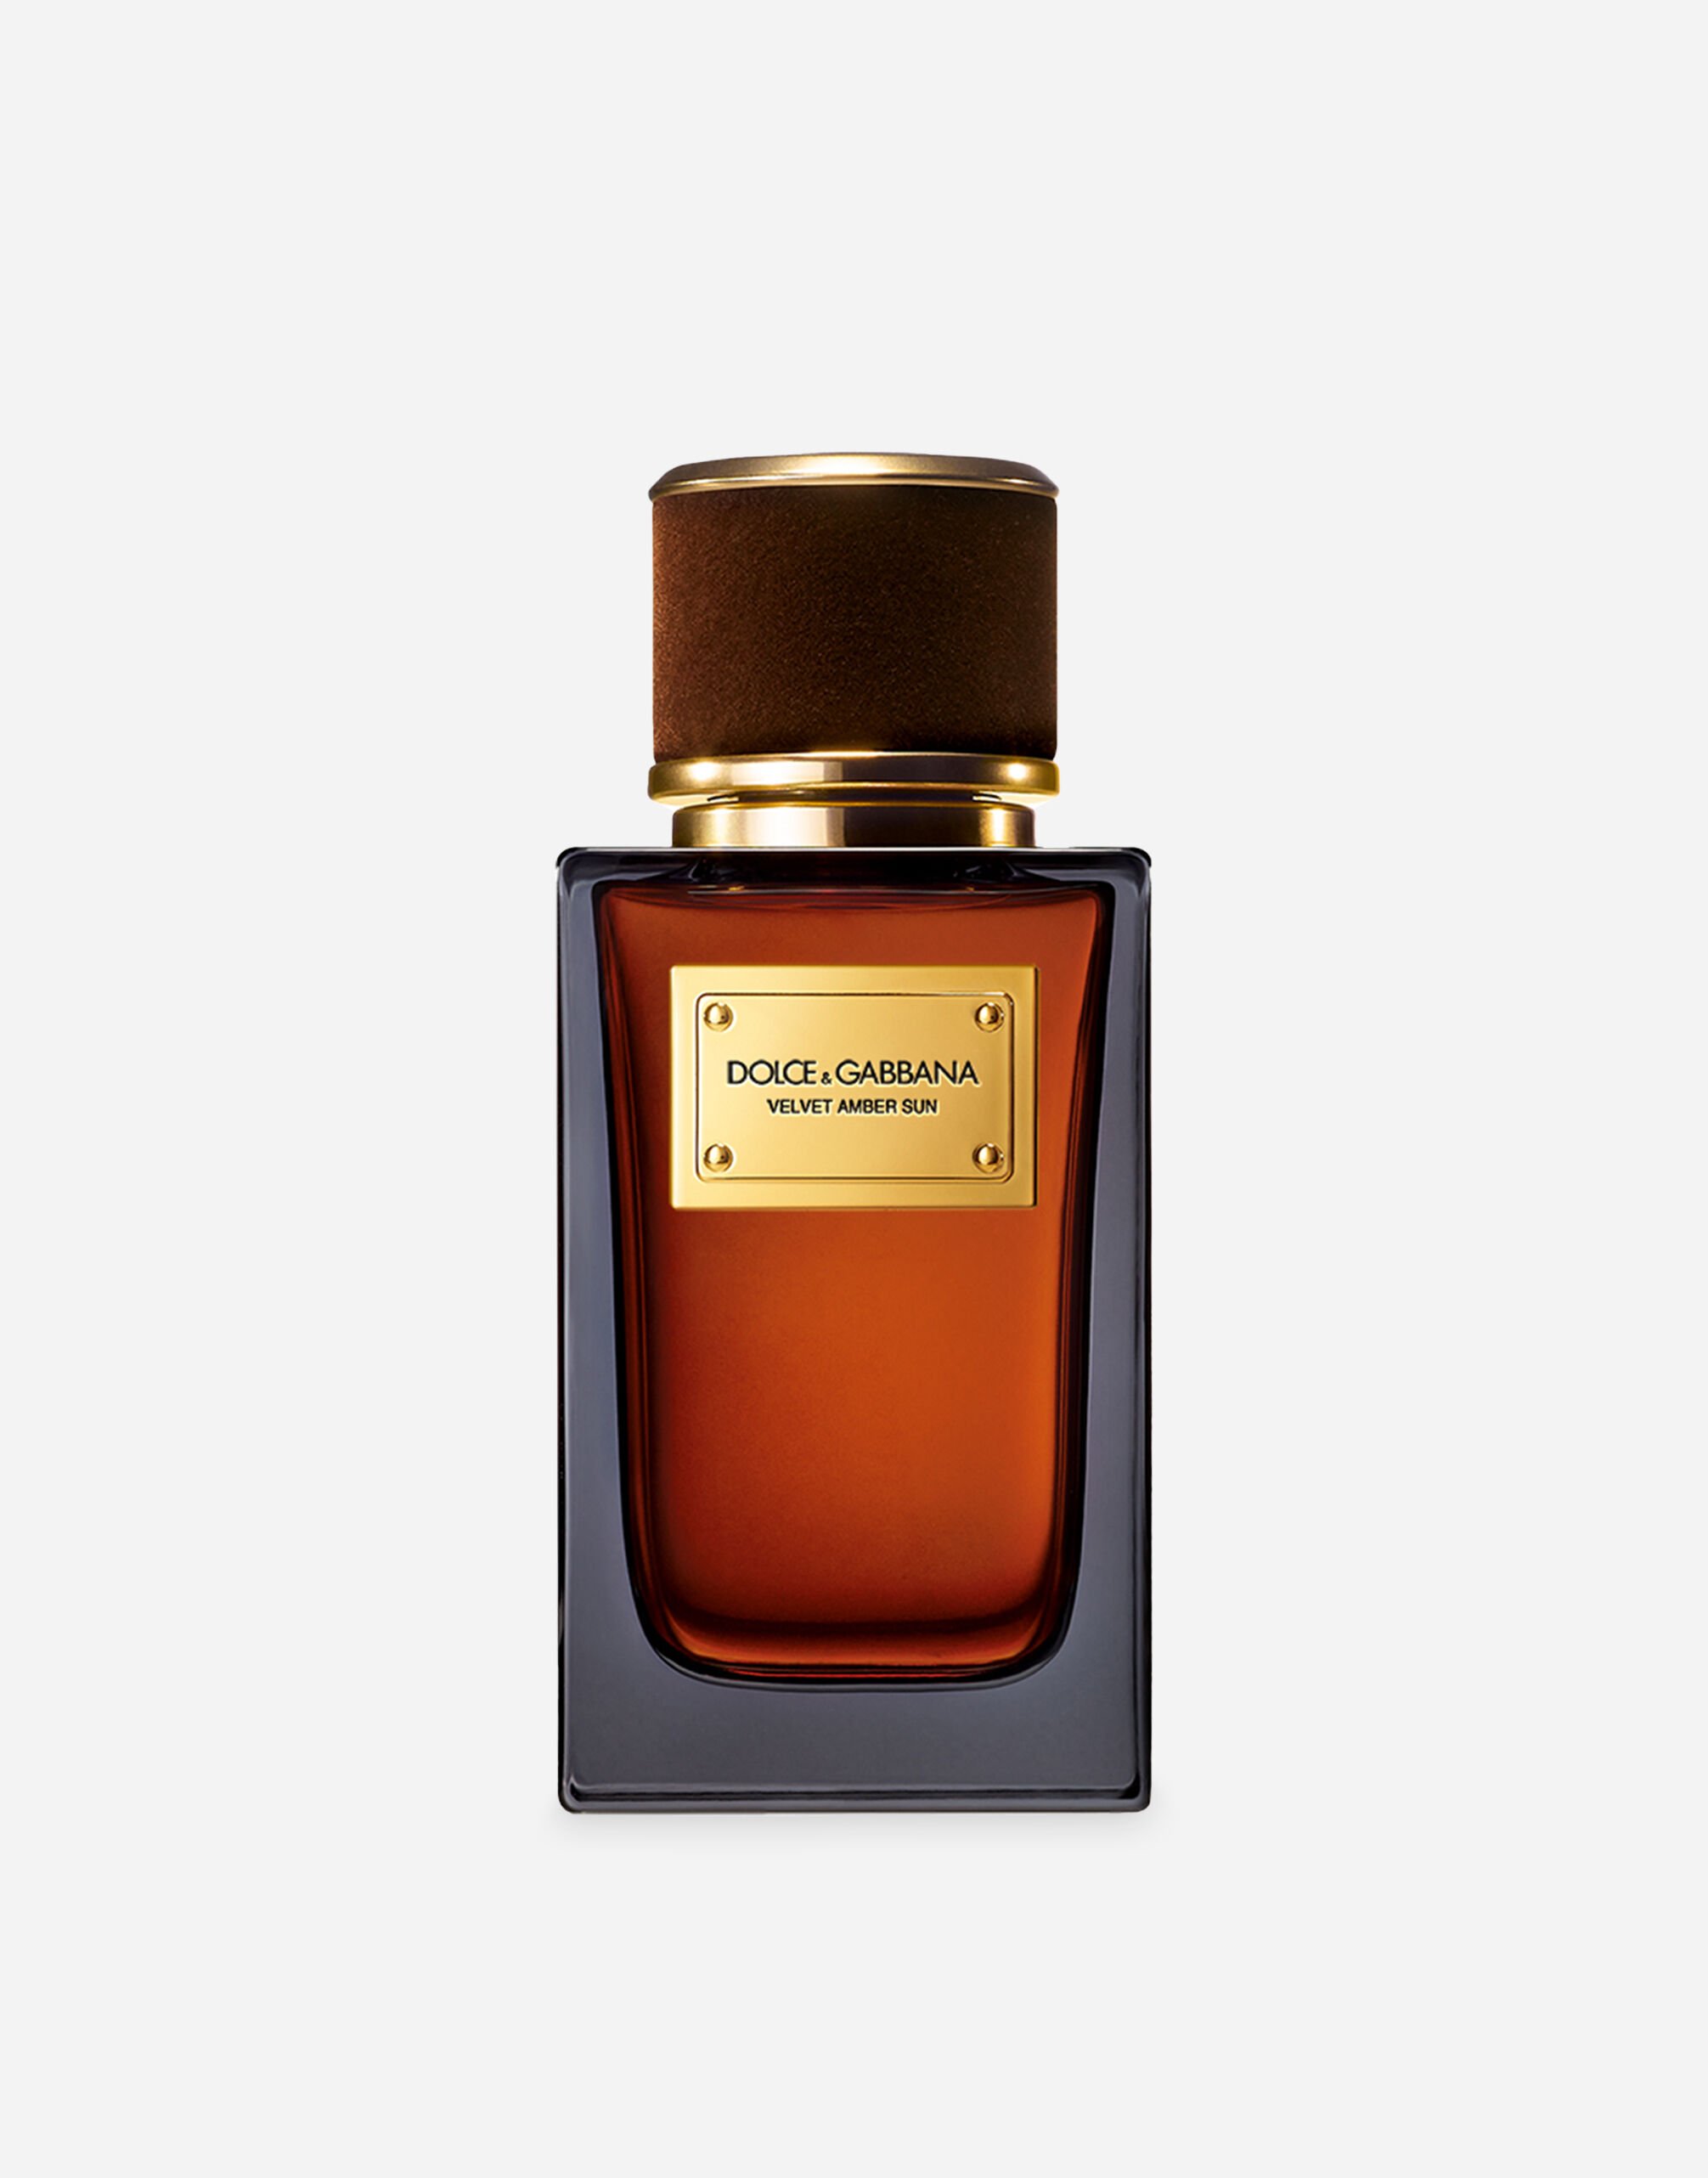 Dolce & Gabbana Velvet Amber Sun Eau de Parfum - VP6975VP243